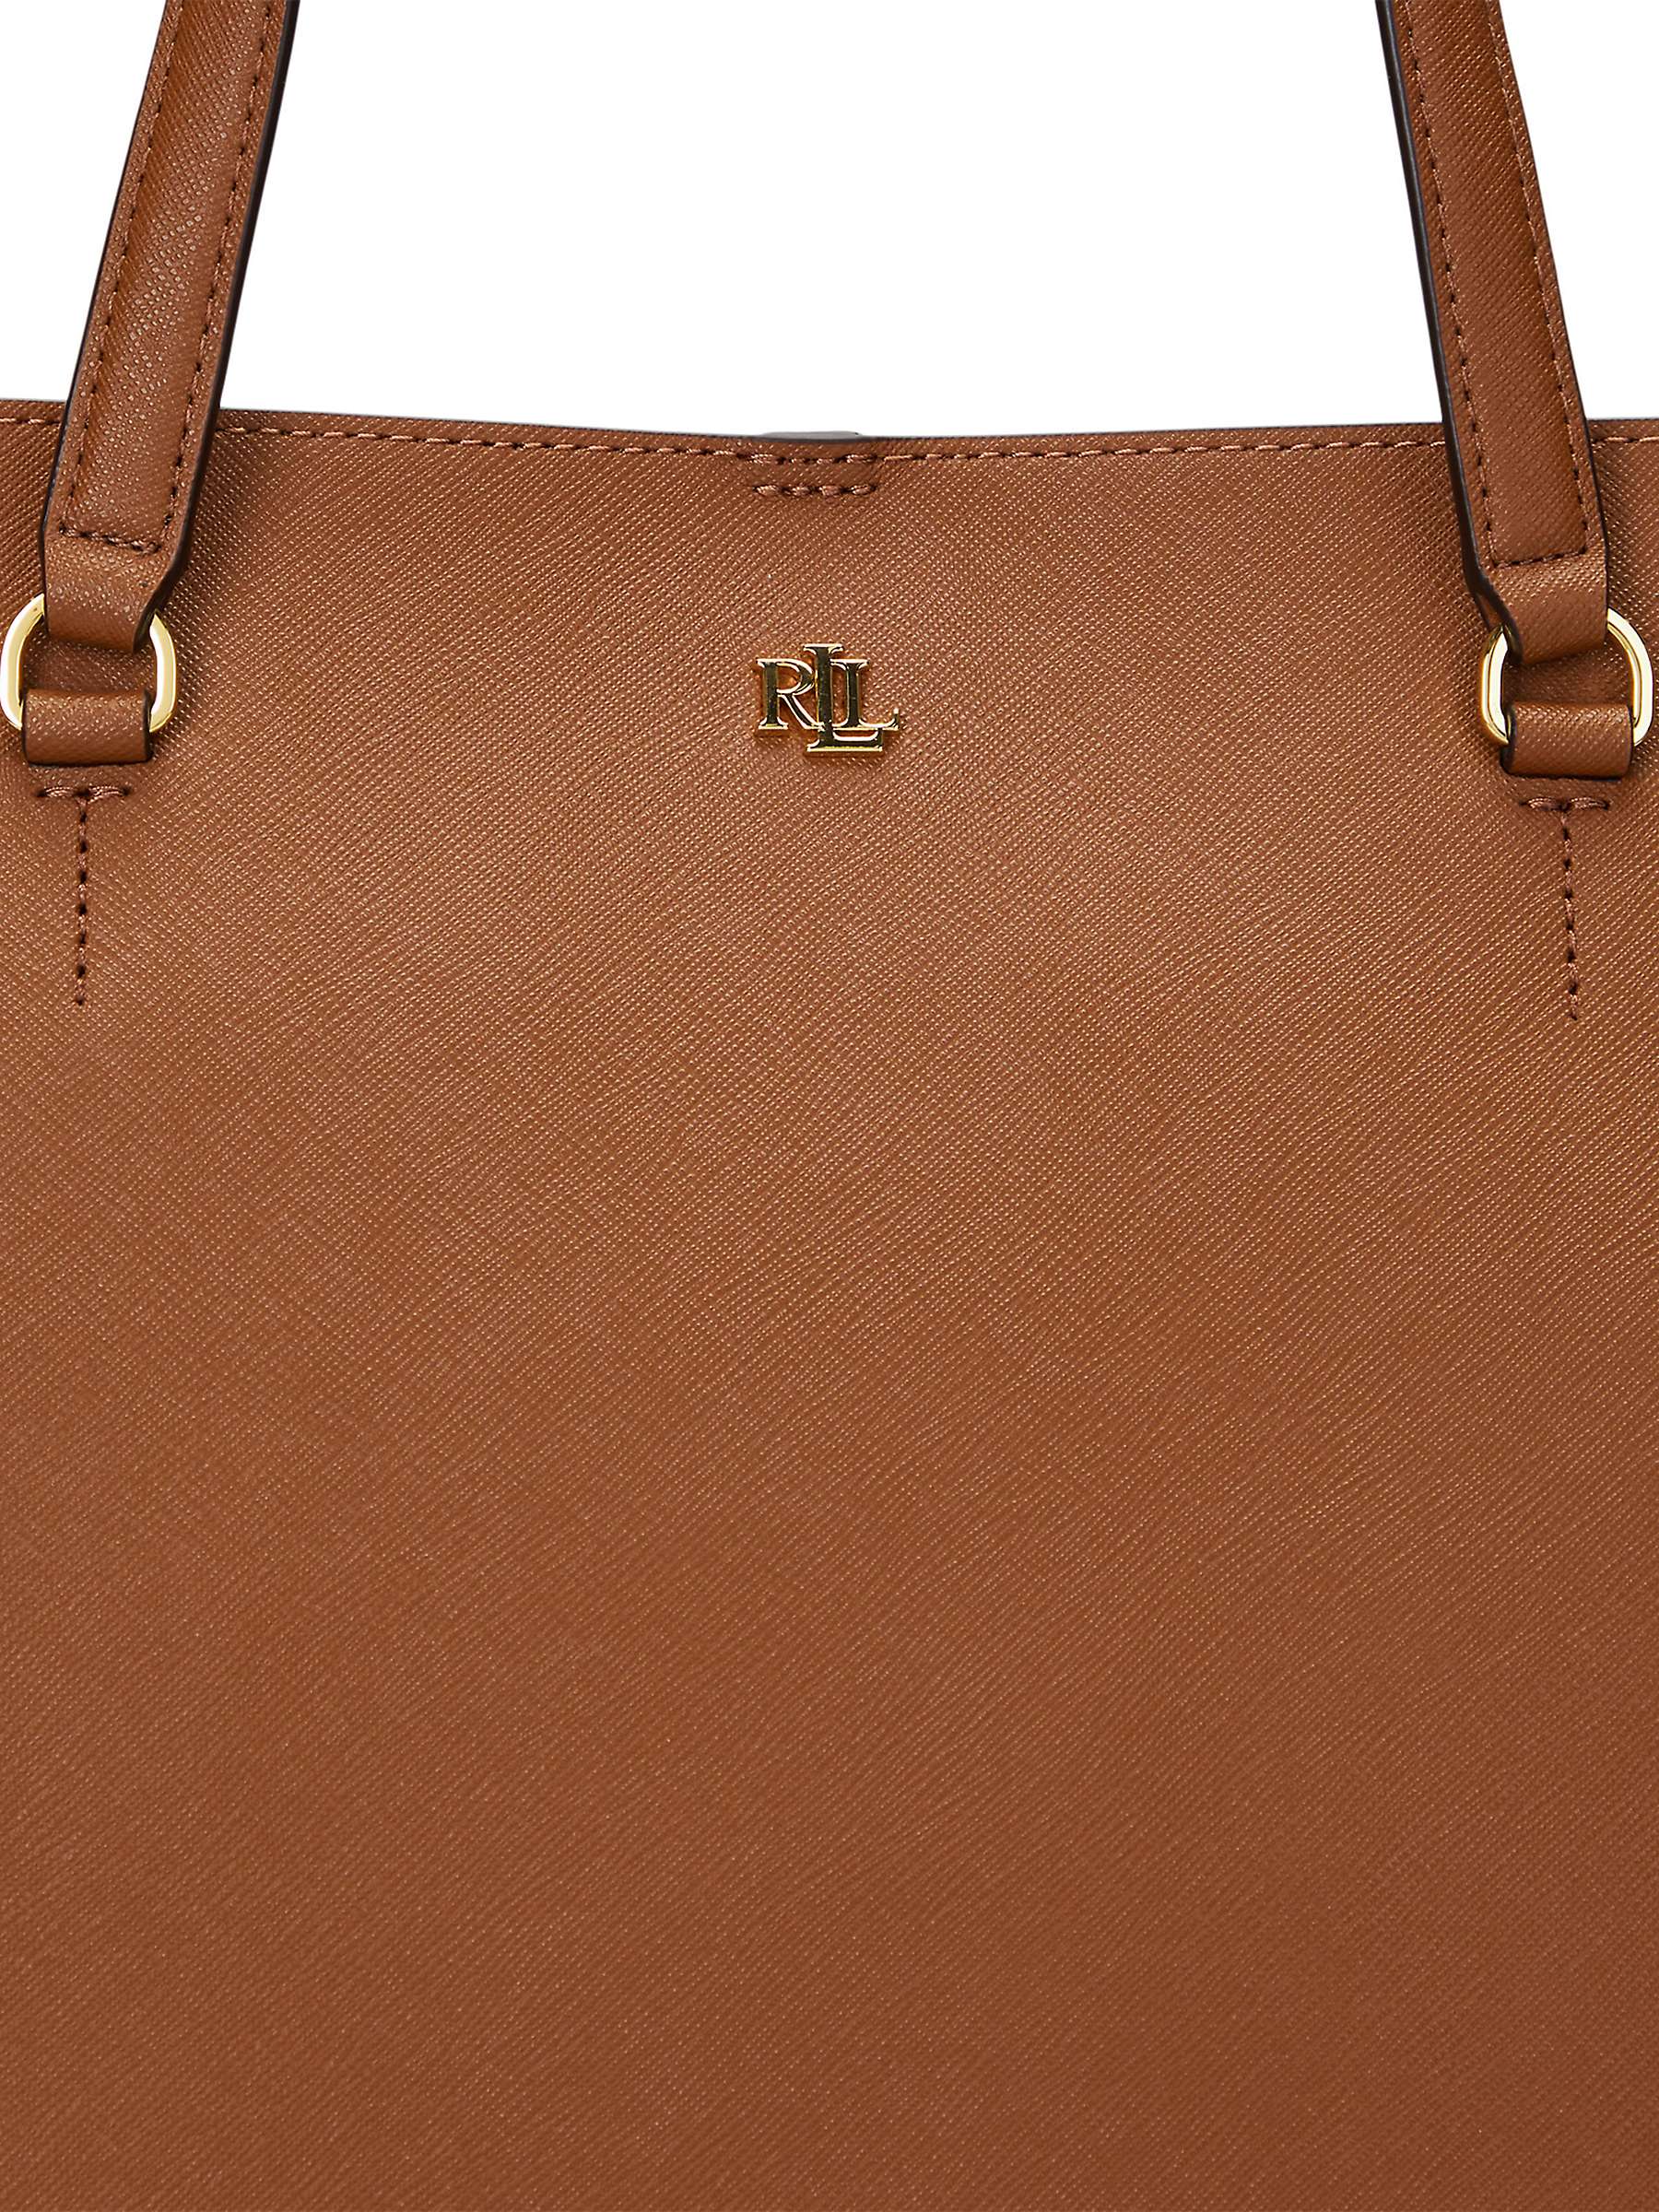 Buy Lauren Ralph Lauren Karly Crosshatch Leather Large Tote Bag Online at johnlewis.com